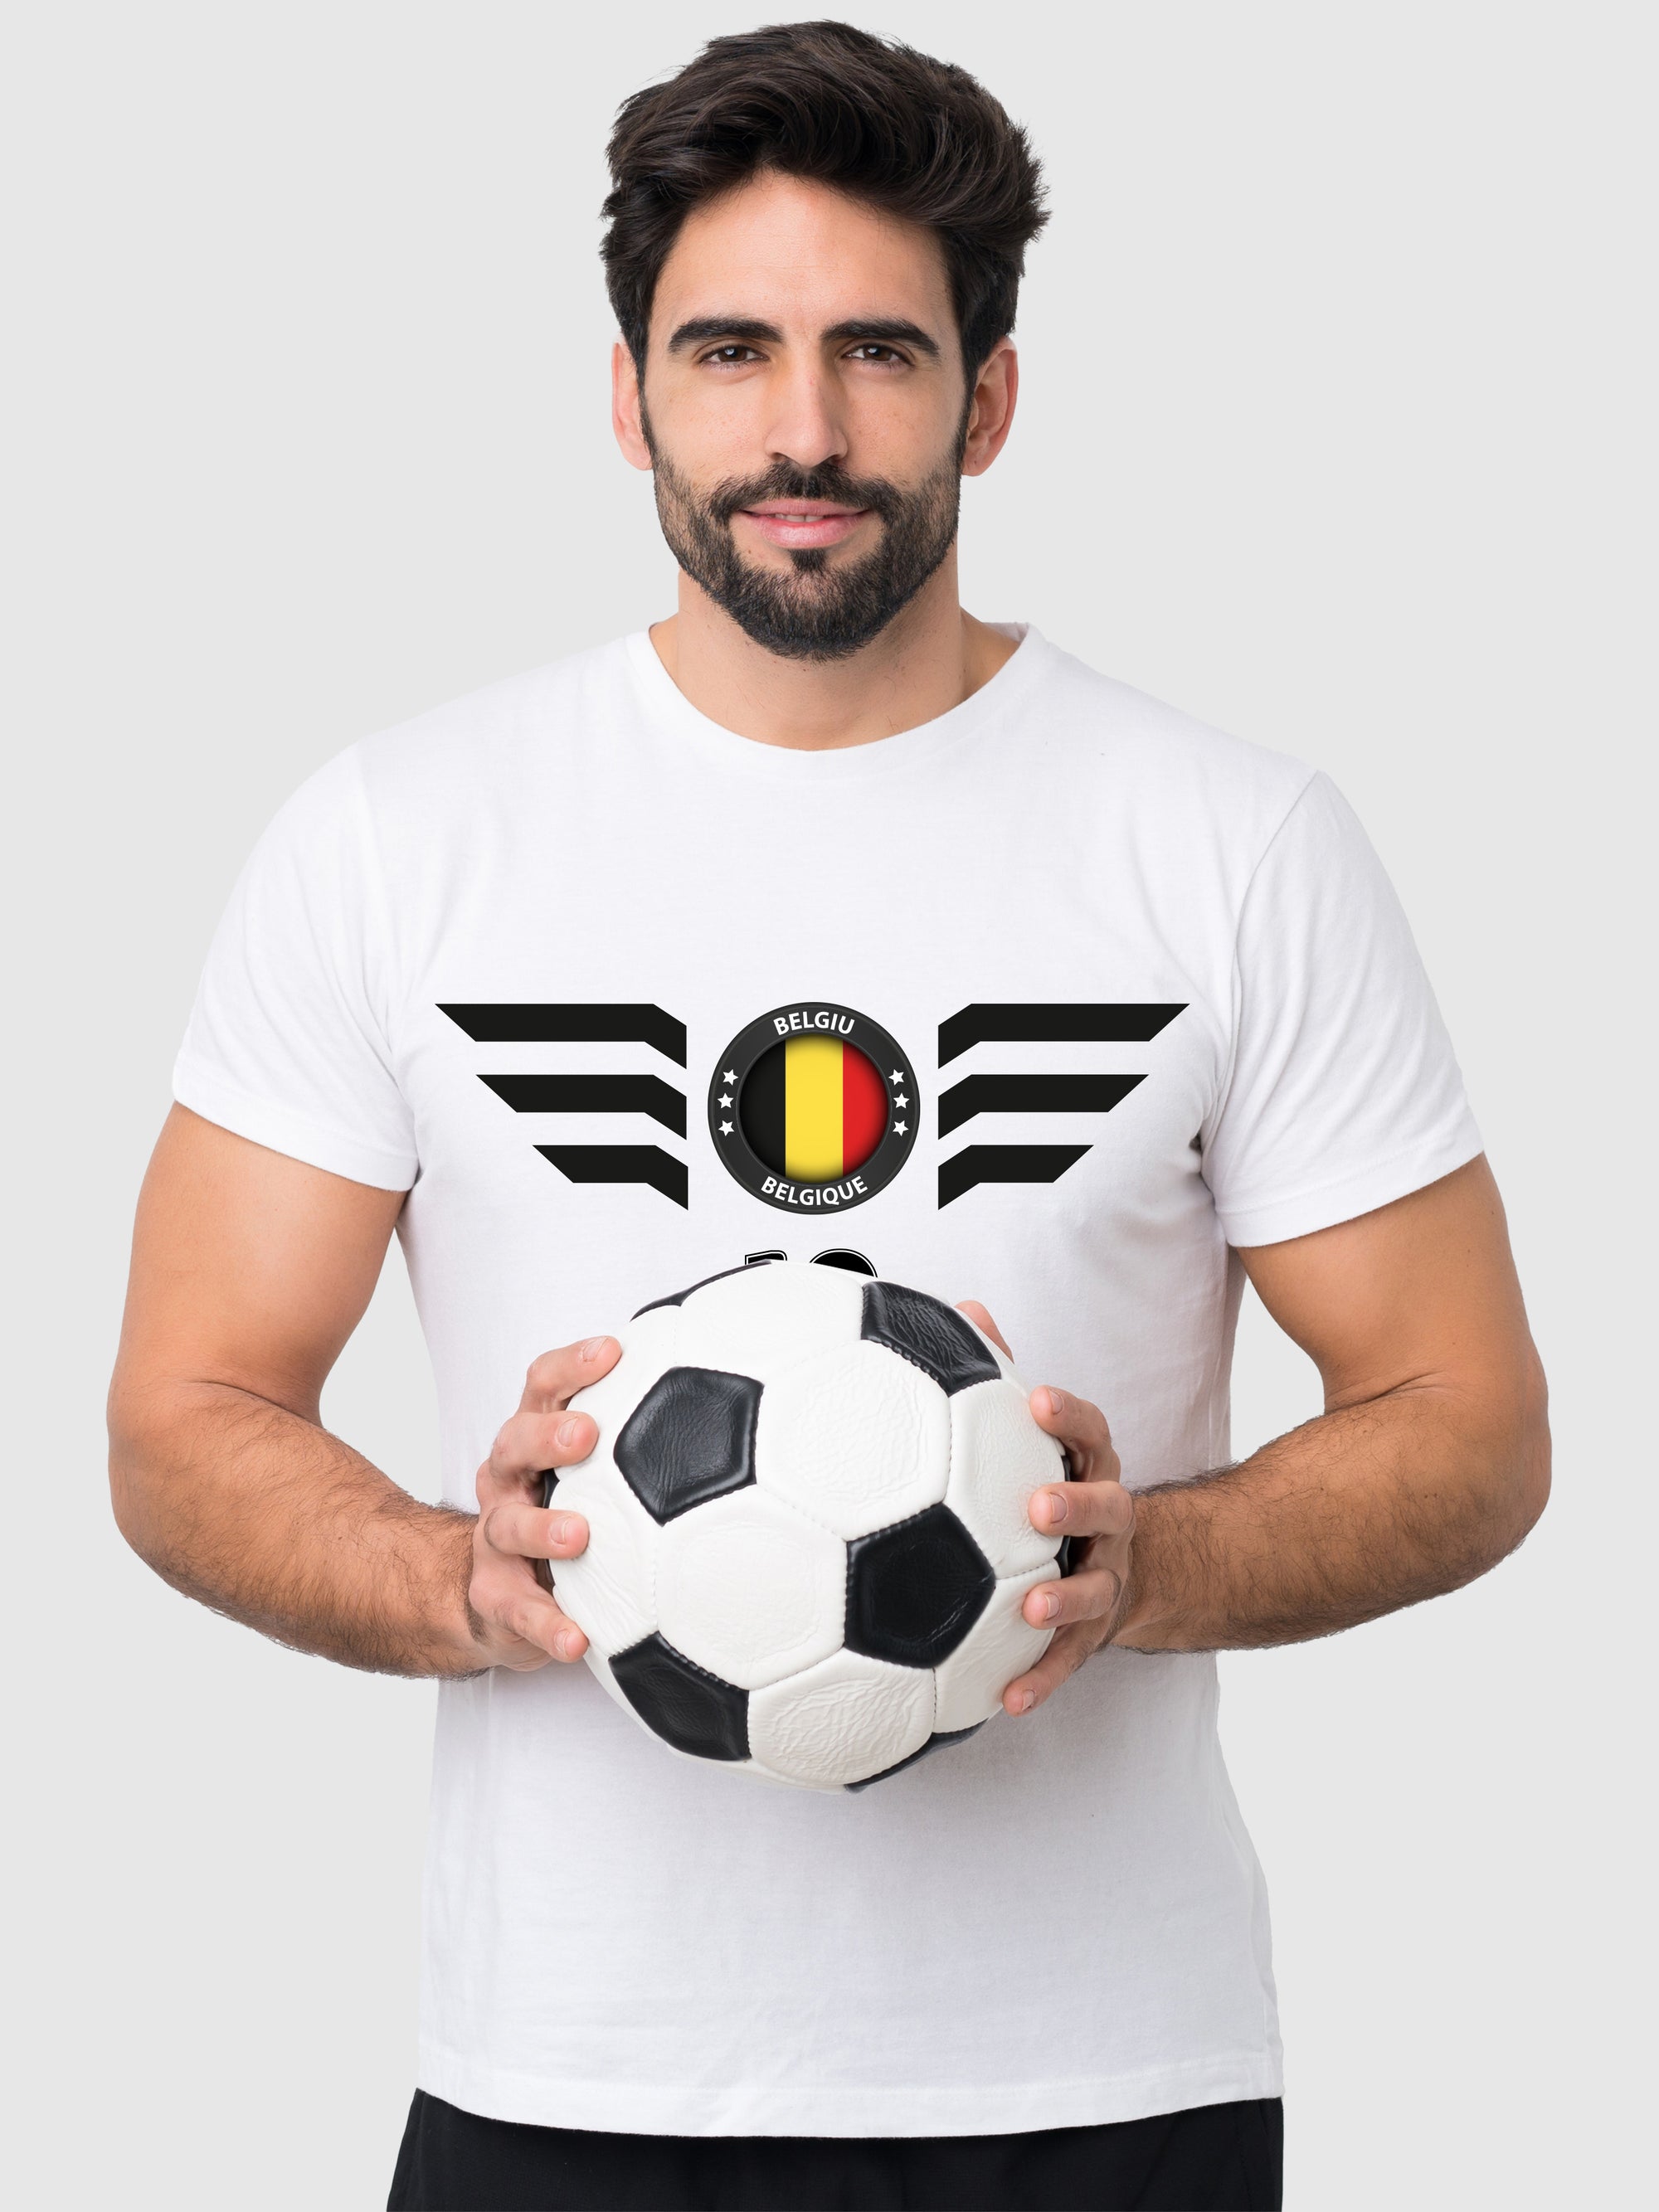 Belgien Fußball Trikot mit Dein Name